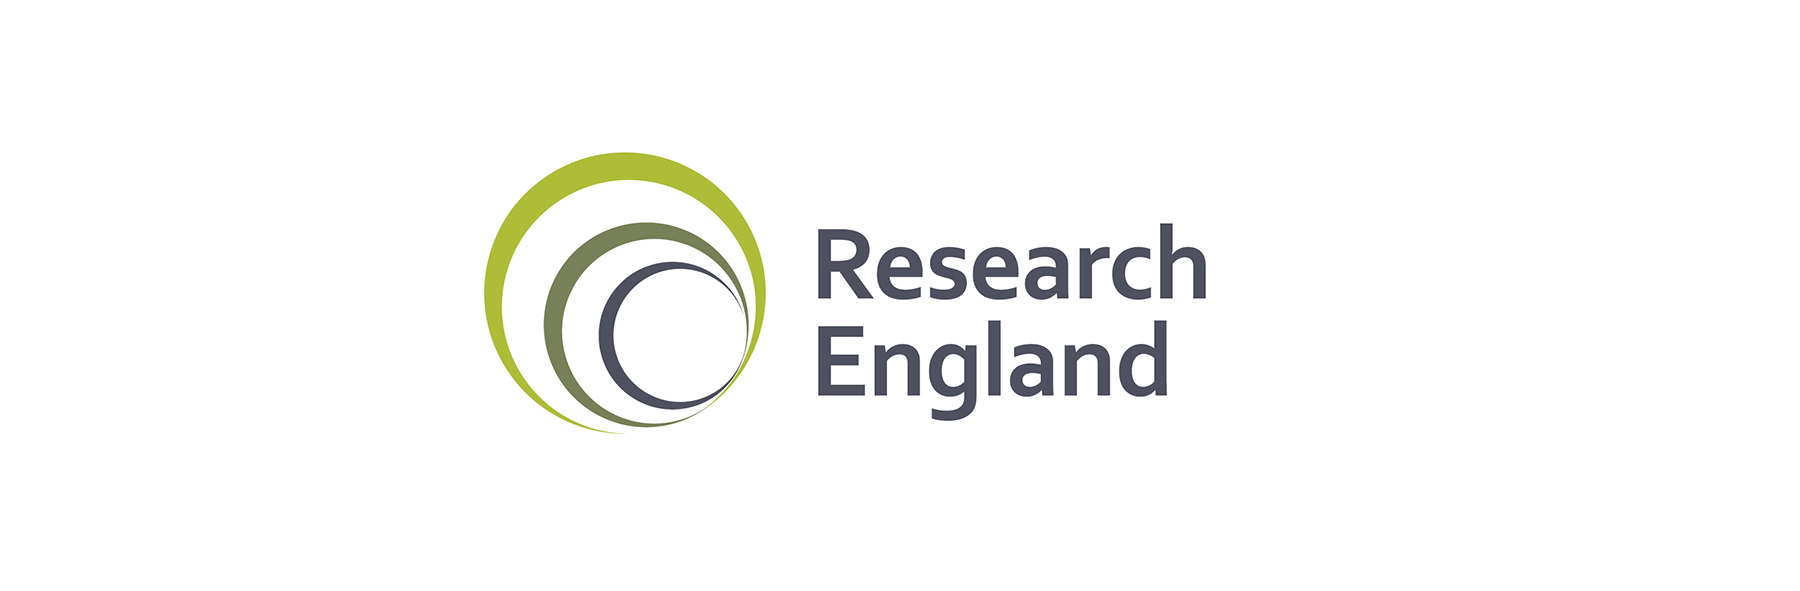 Research England Logo